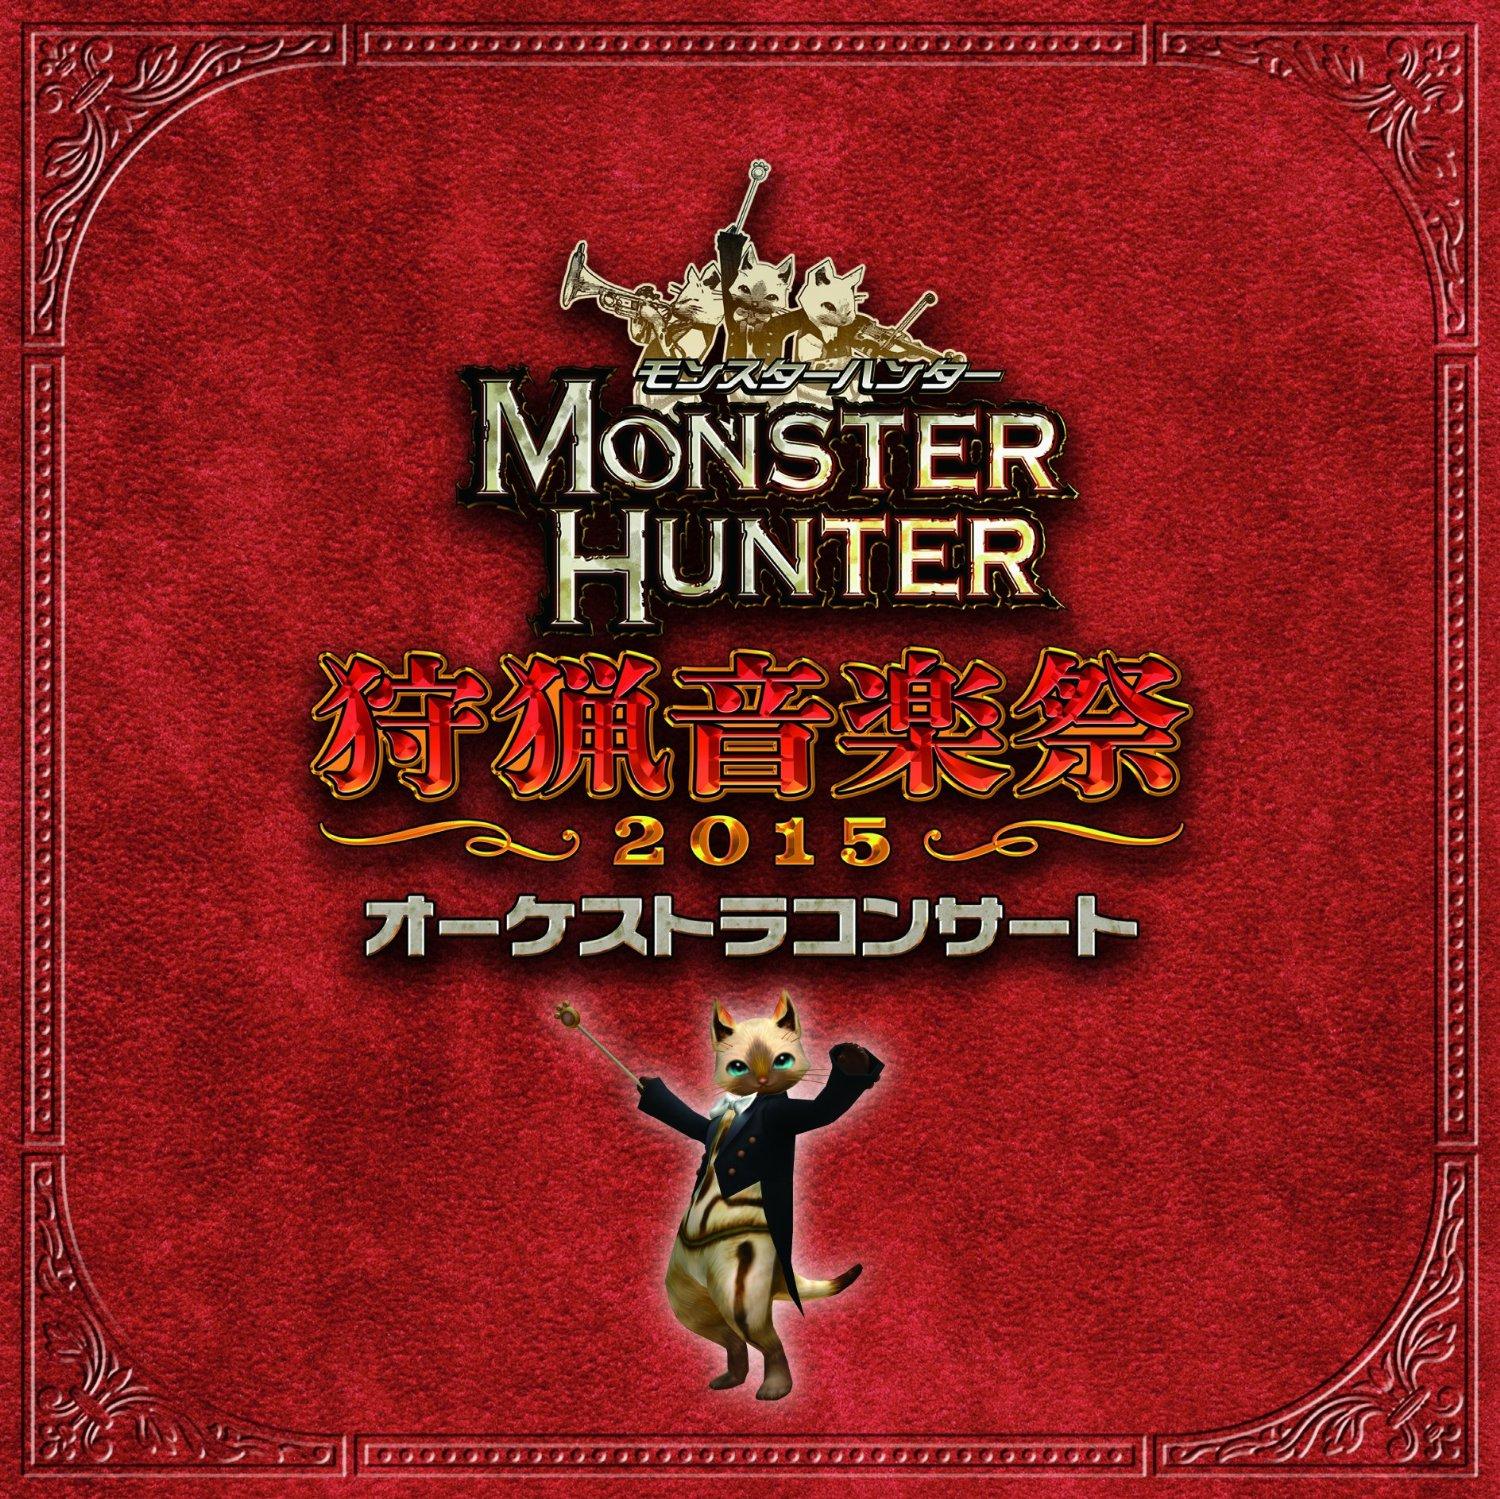 Monster Hunter Orchestra Concert: Hunting Music Festival 2015